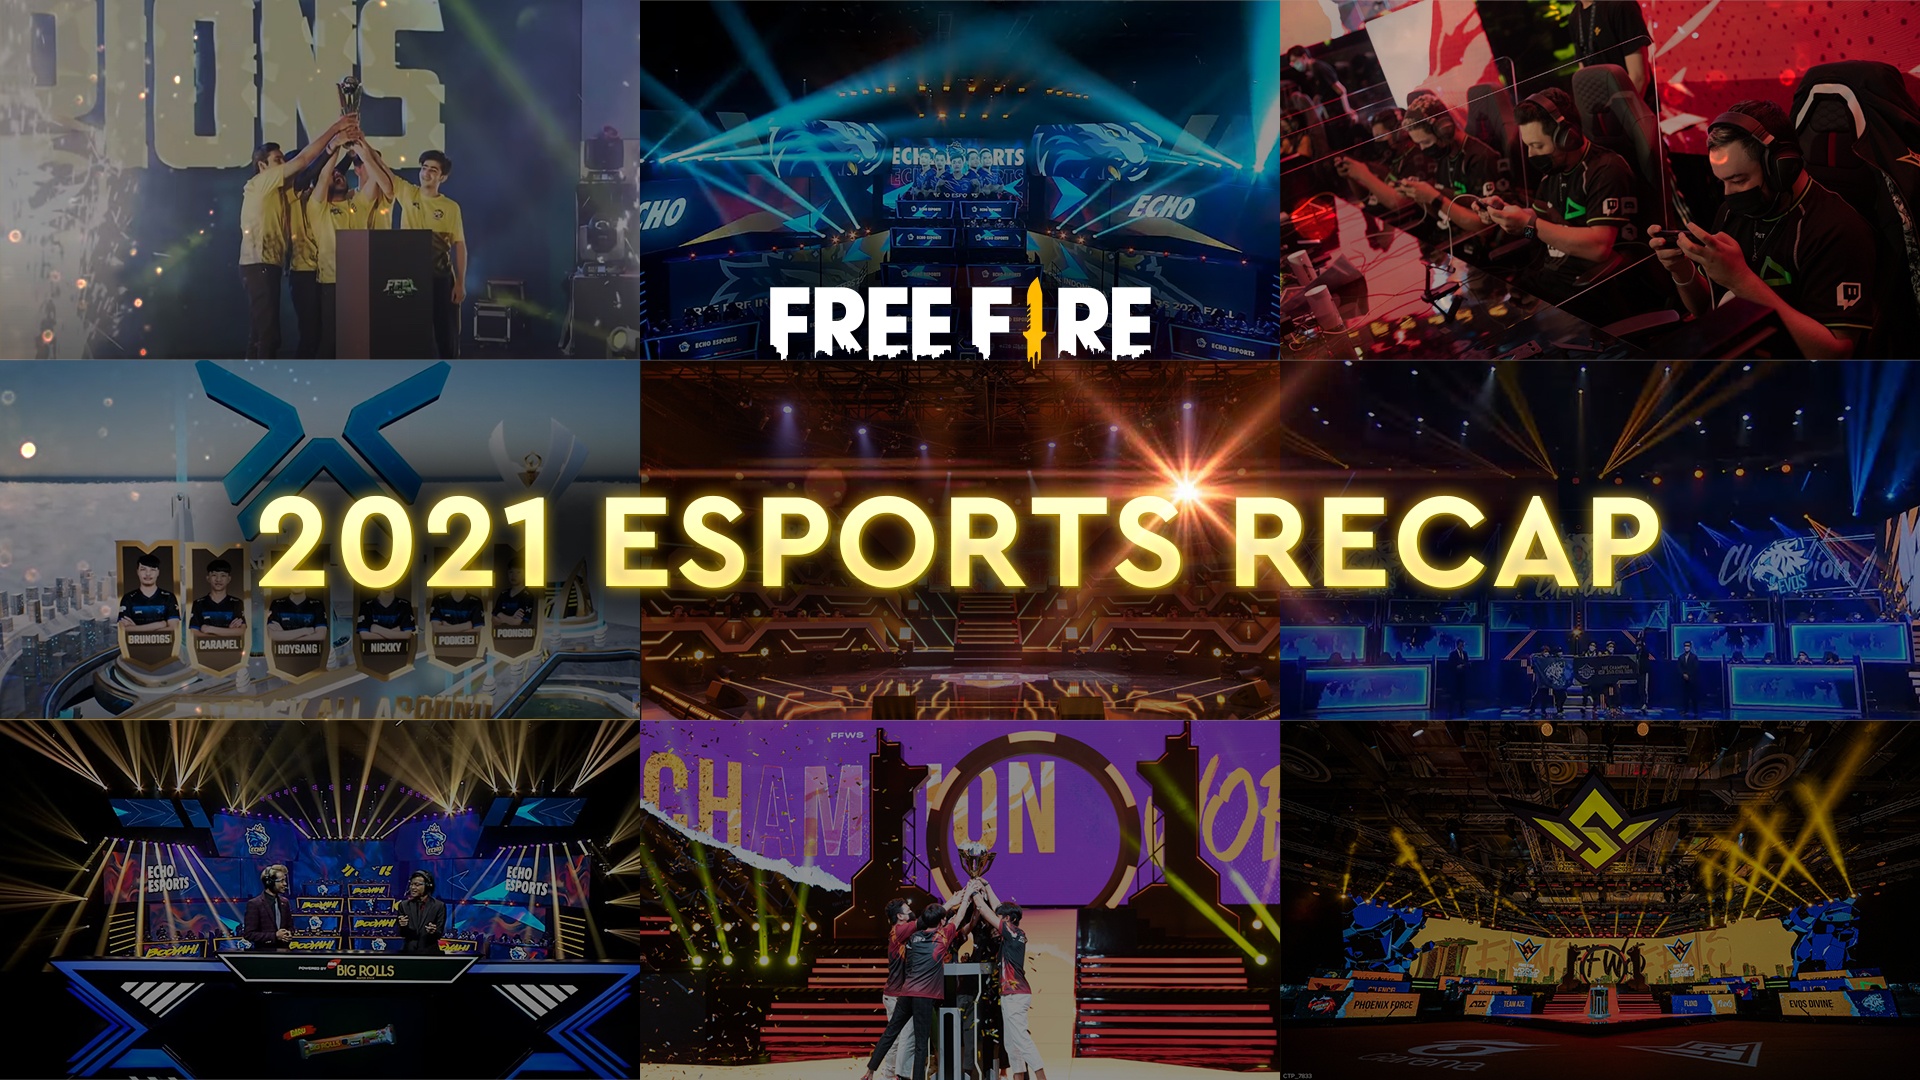 2021 Esports Recap | Free Fire Esports